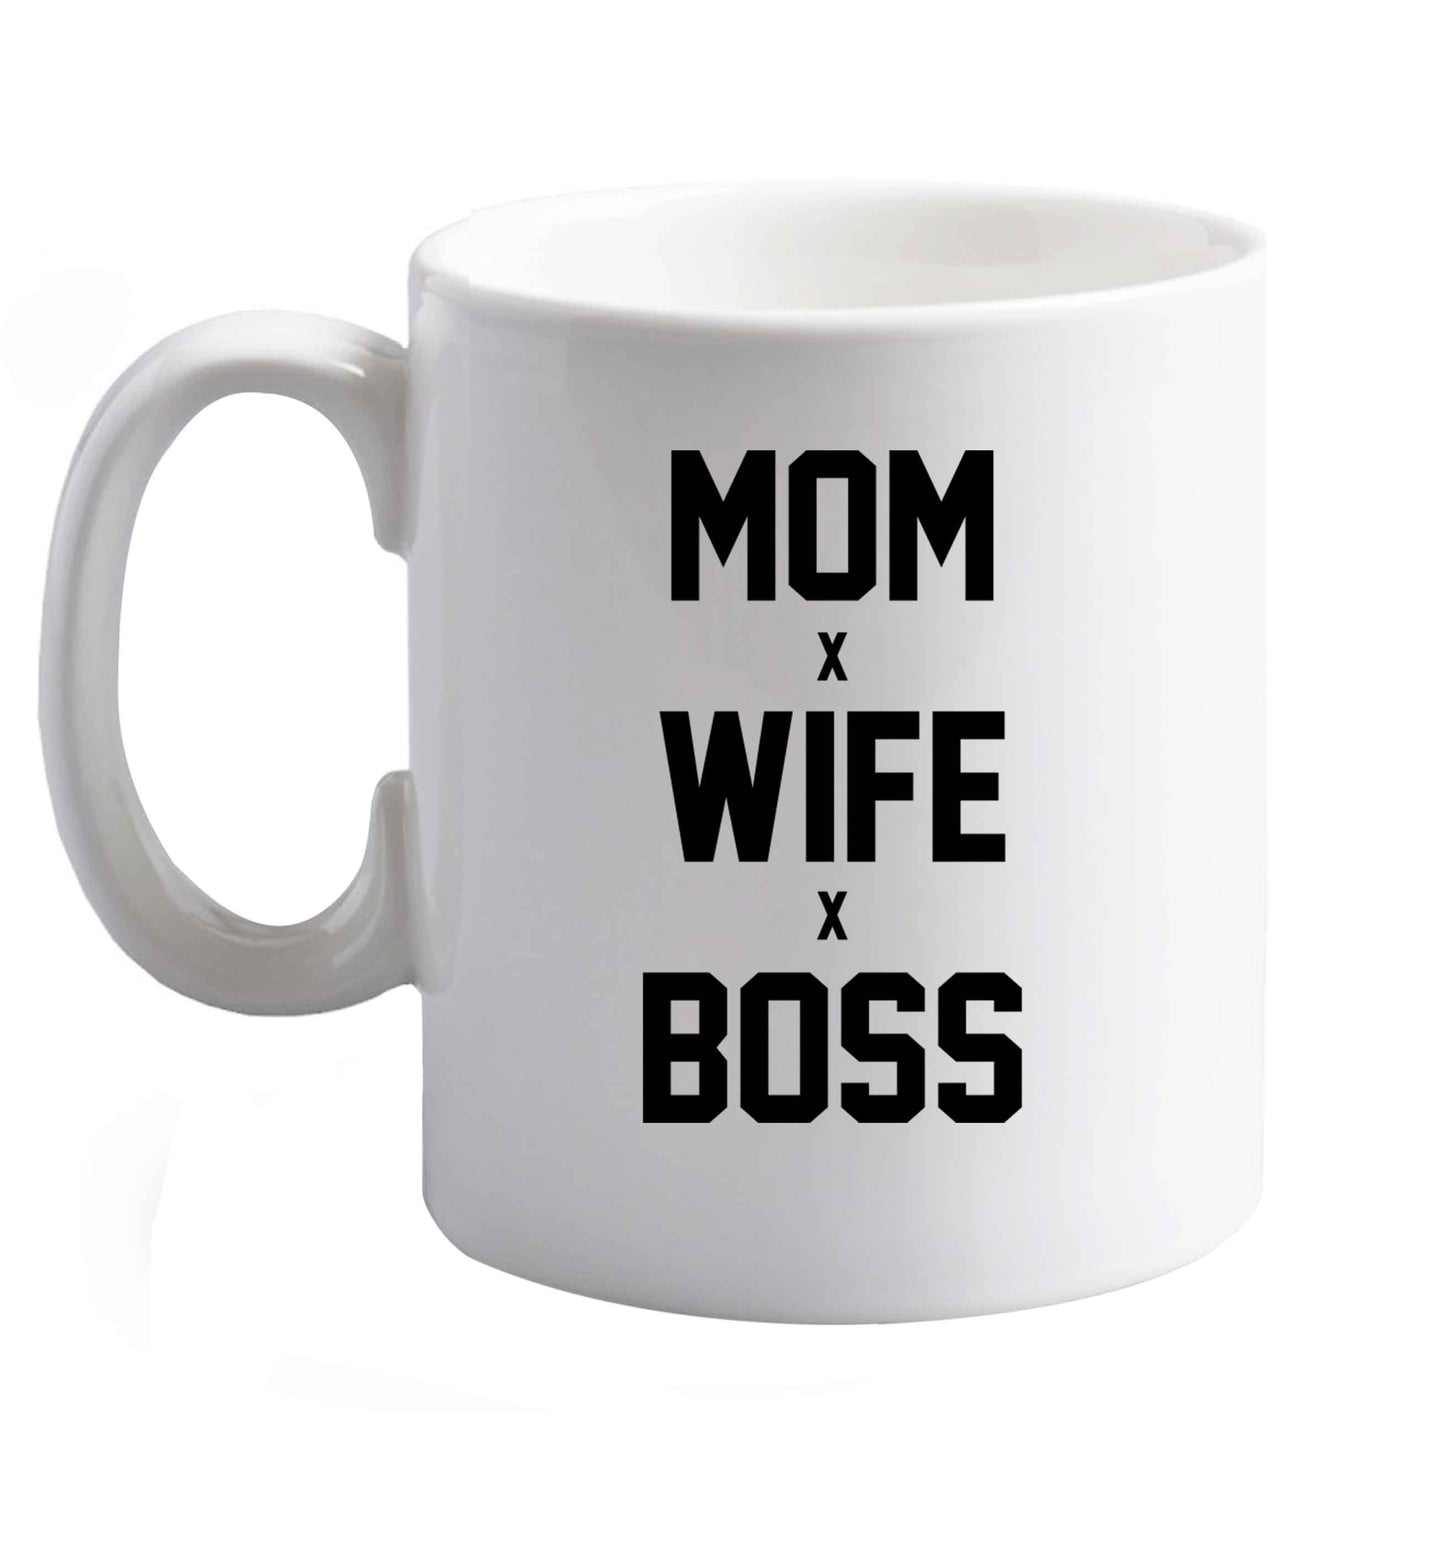 10 oz Mum wife boss ceramic mug right handed